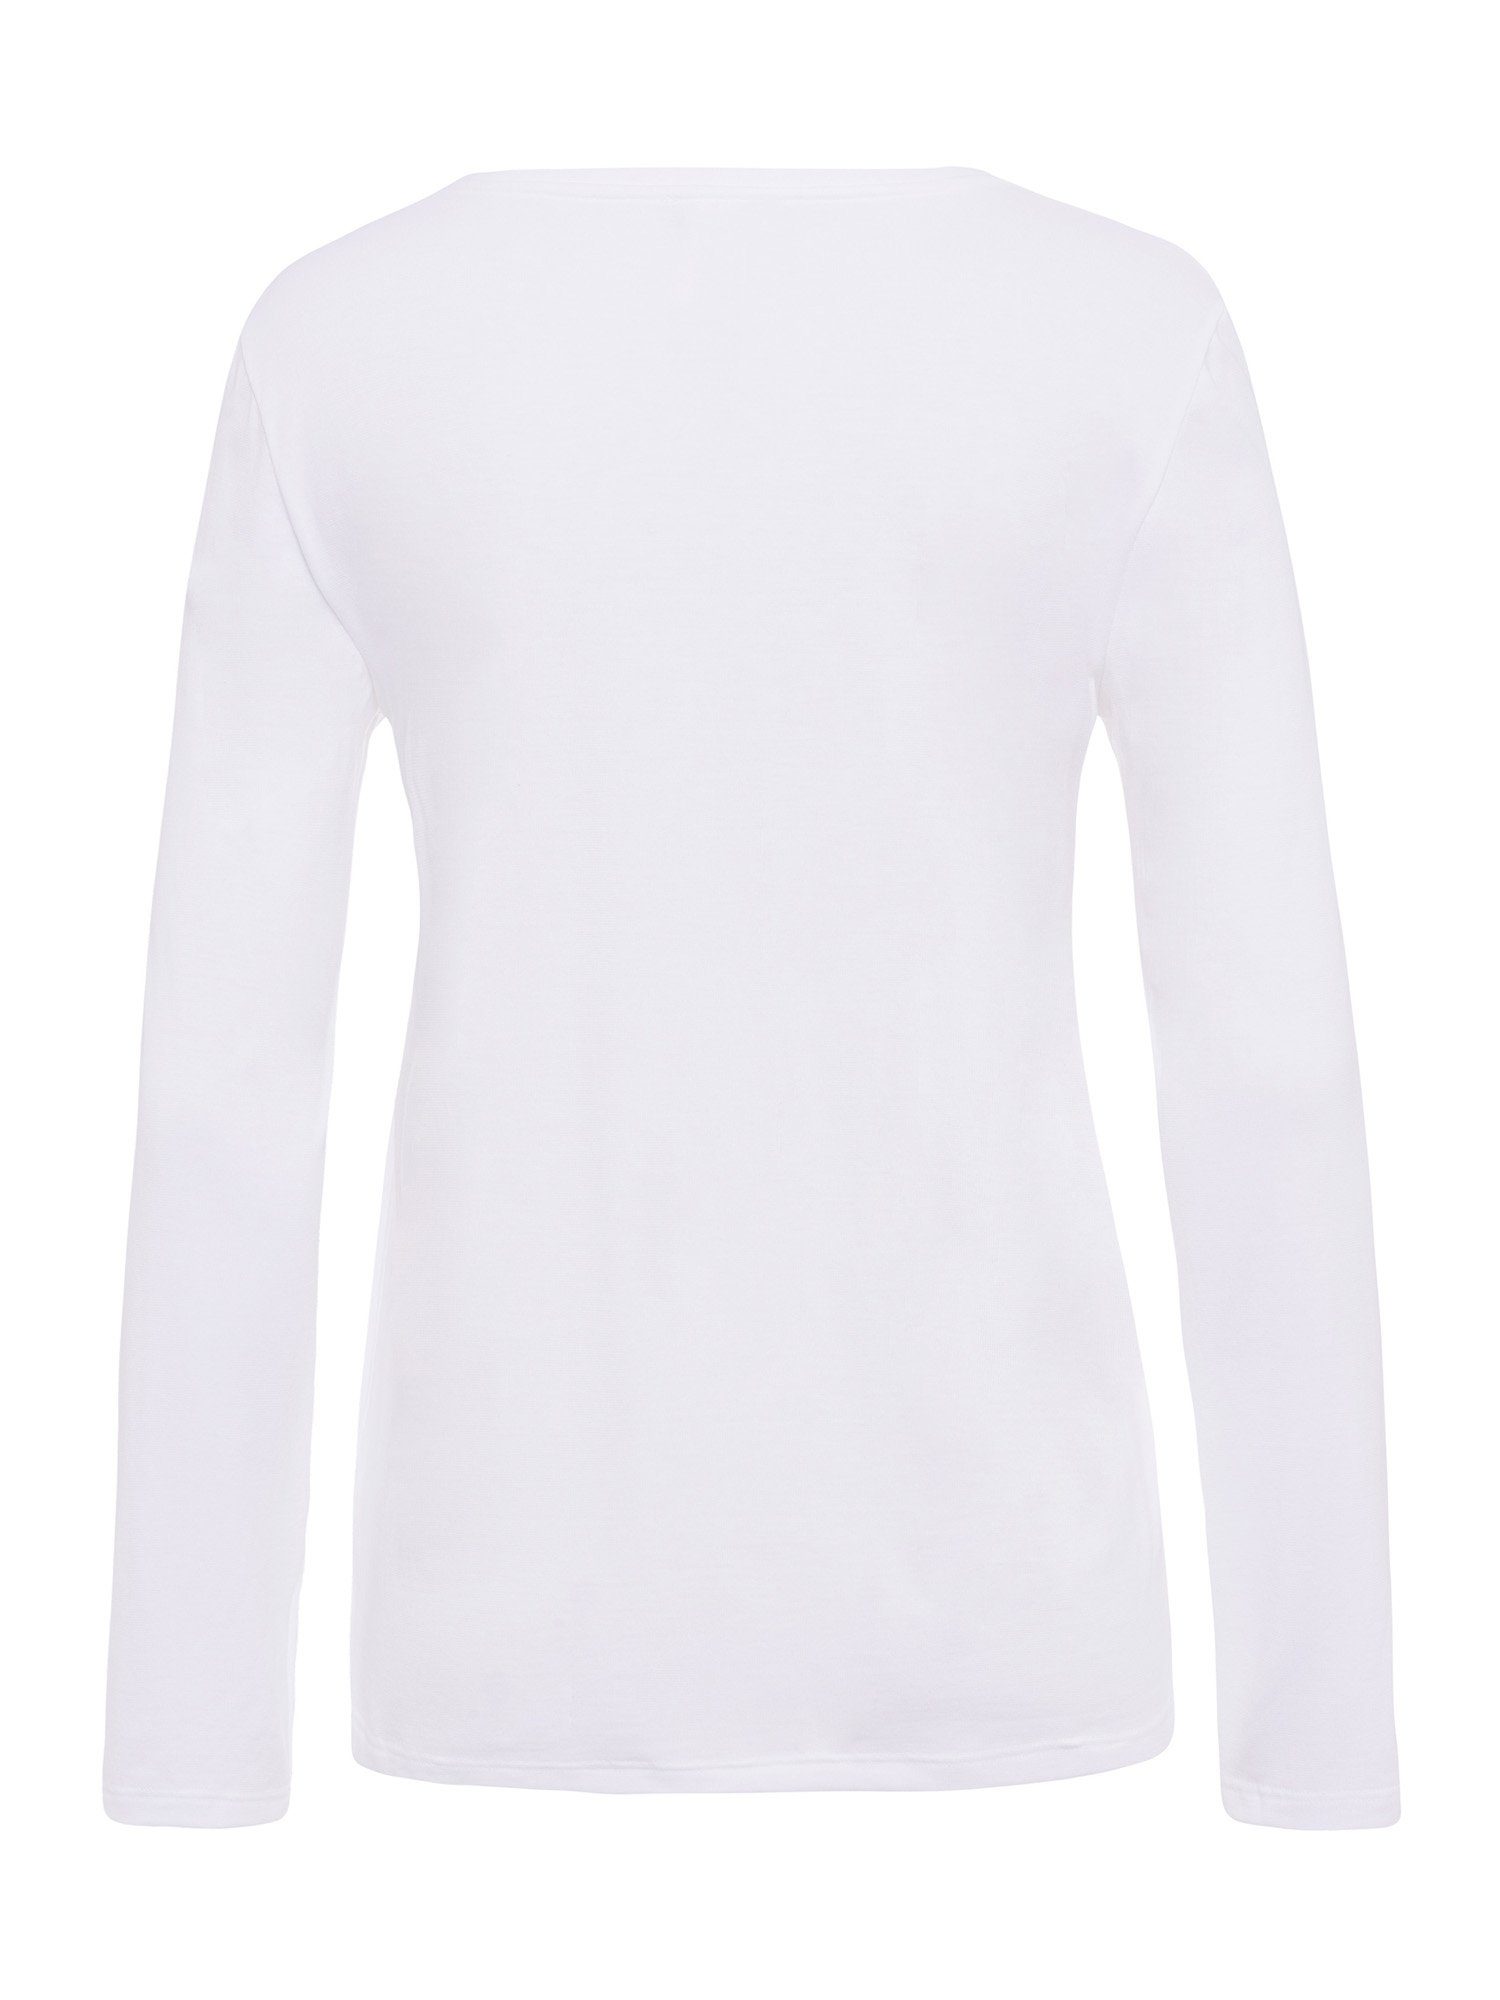 Hanro Sleep Lounge Pyjamaoberteil langarm shirt unterhemd & white